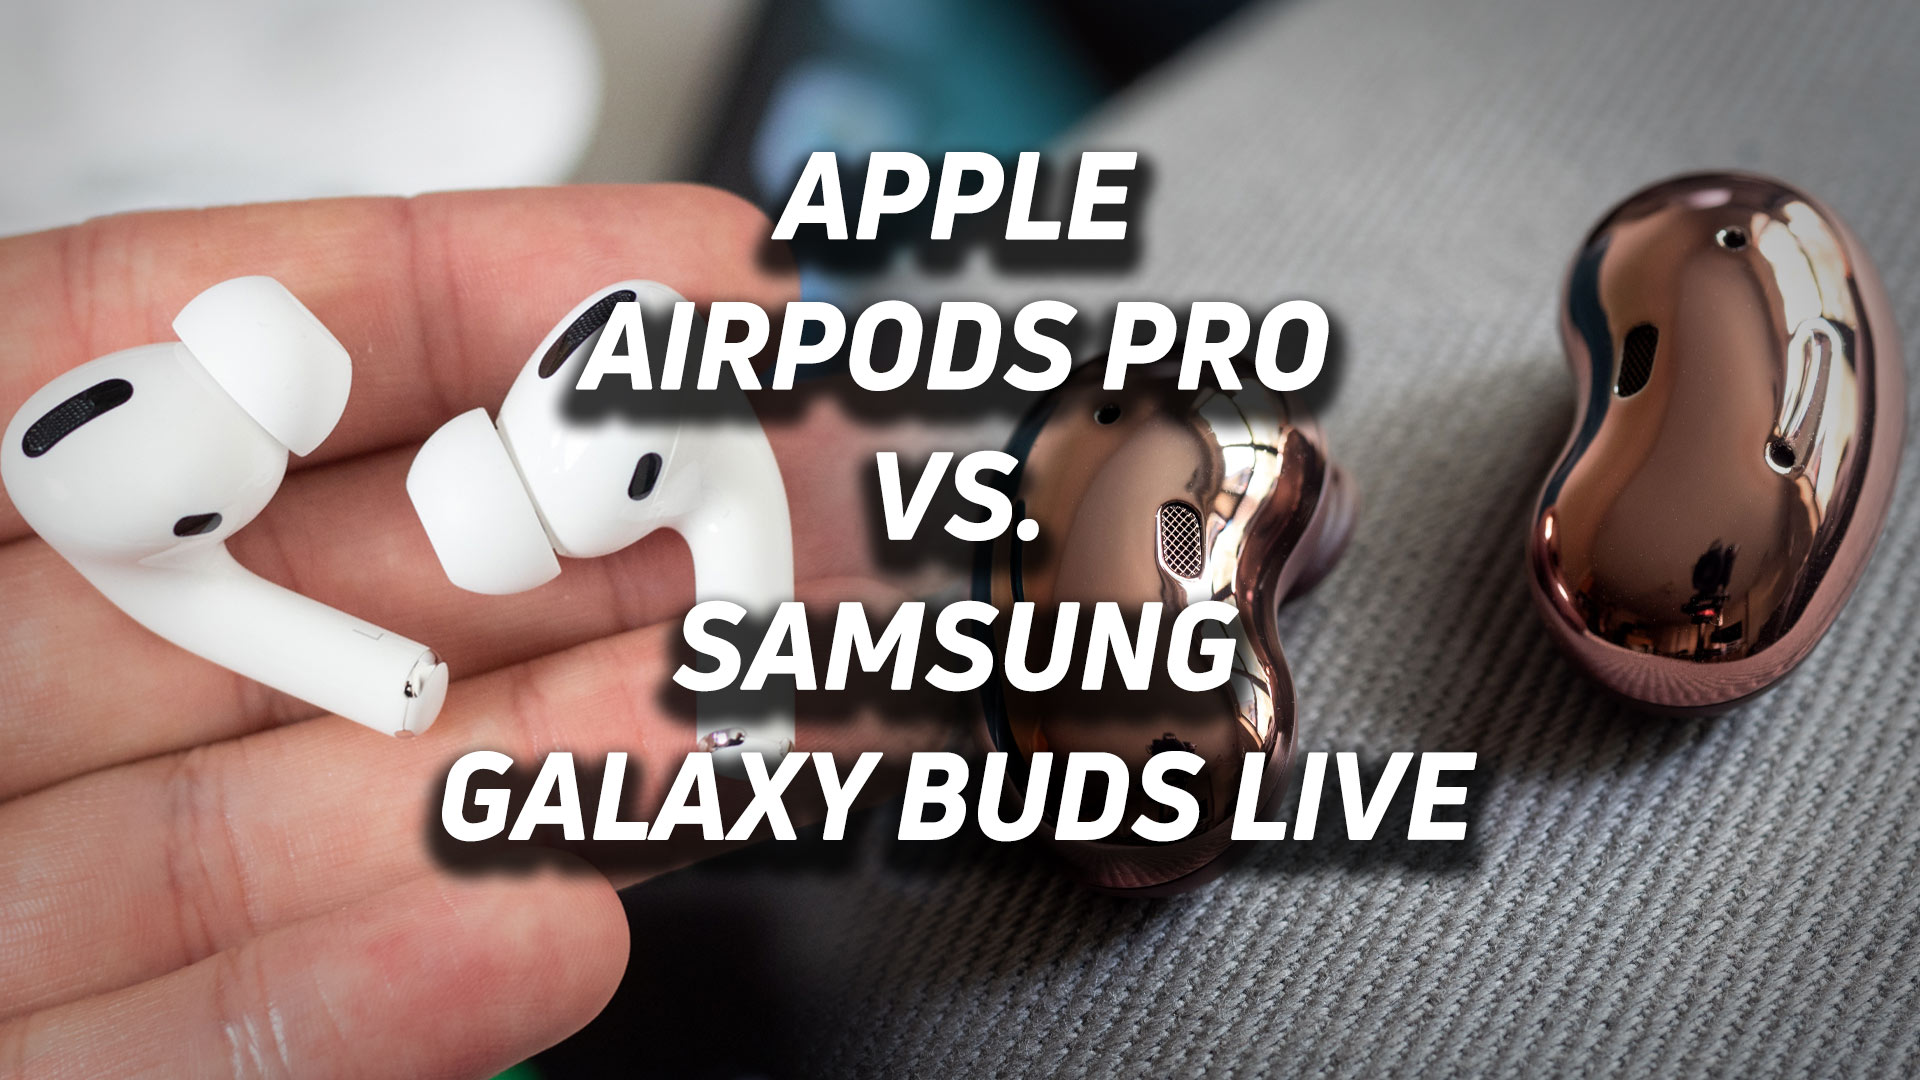 https://www.soundguys.com/wp-content/uploads/2020/08/Apple-AirPods-Pro-vs-Samsung-Galaxy-Buds-Live-hero.jpg